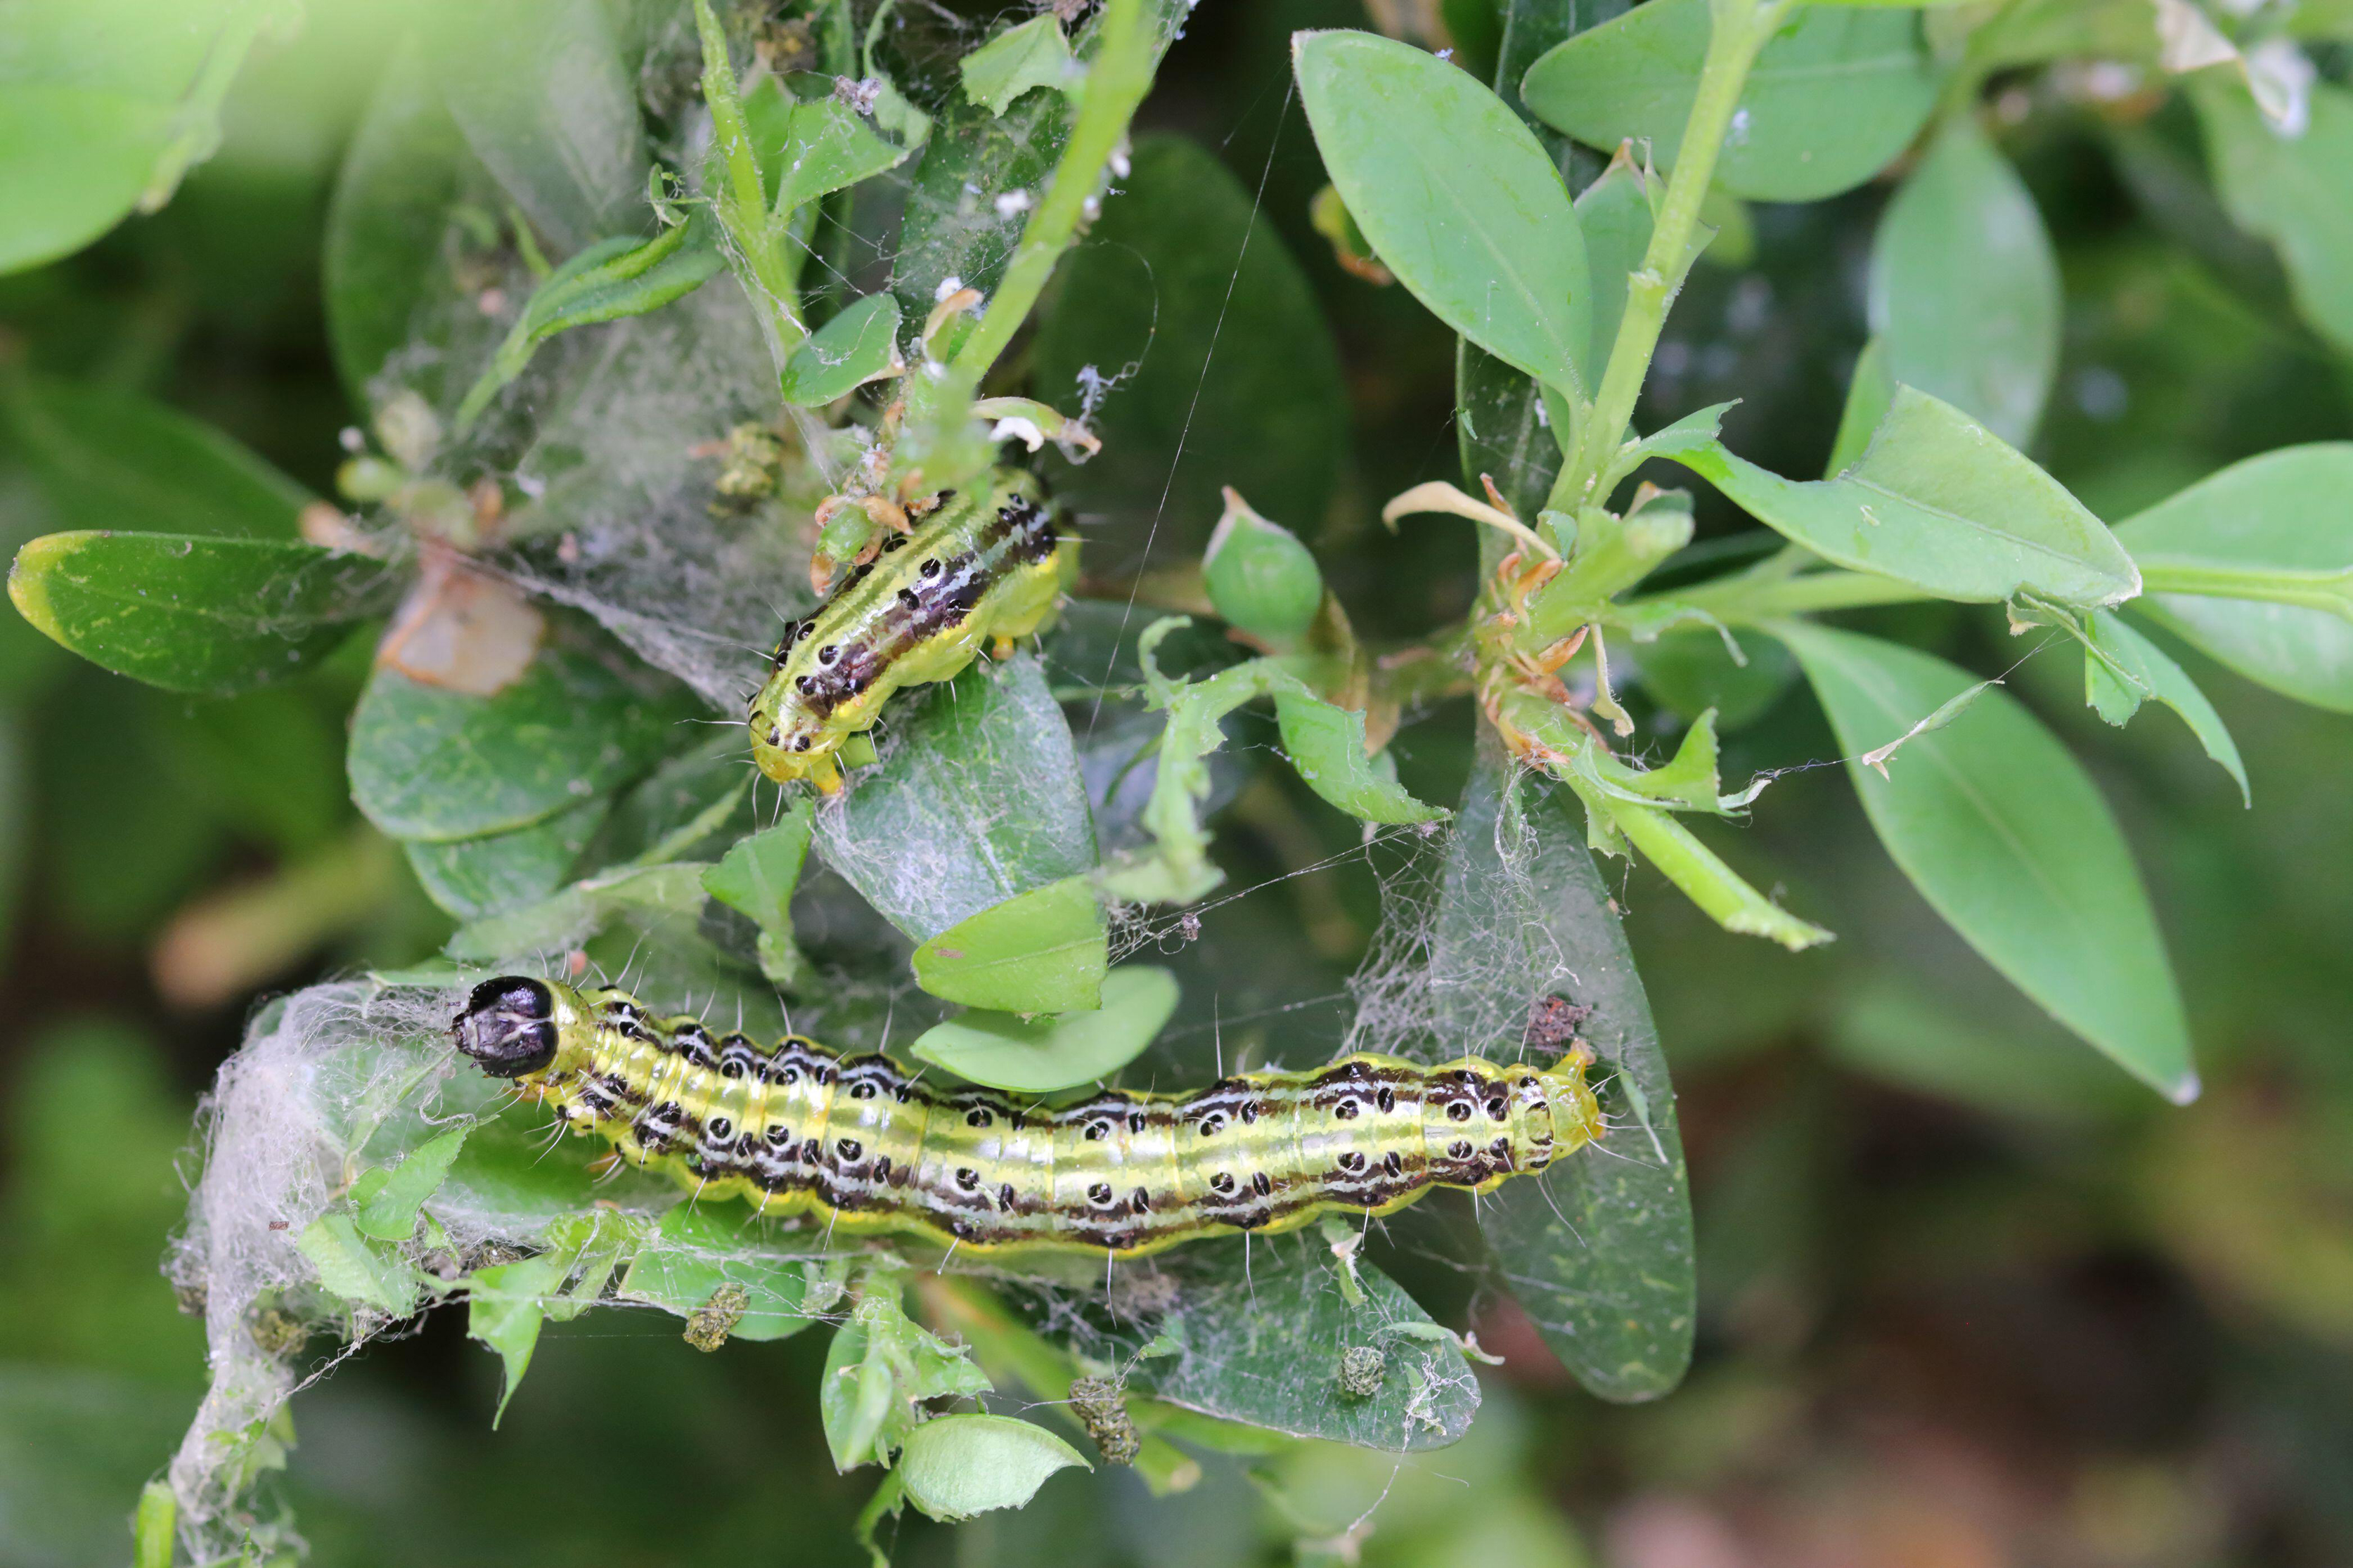 Box tree moth caterpillars (Alamy/PA)